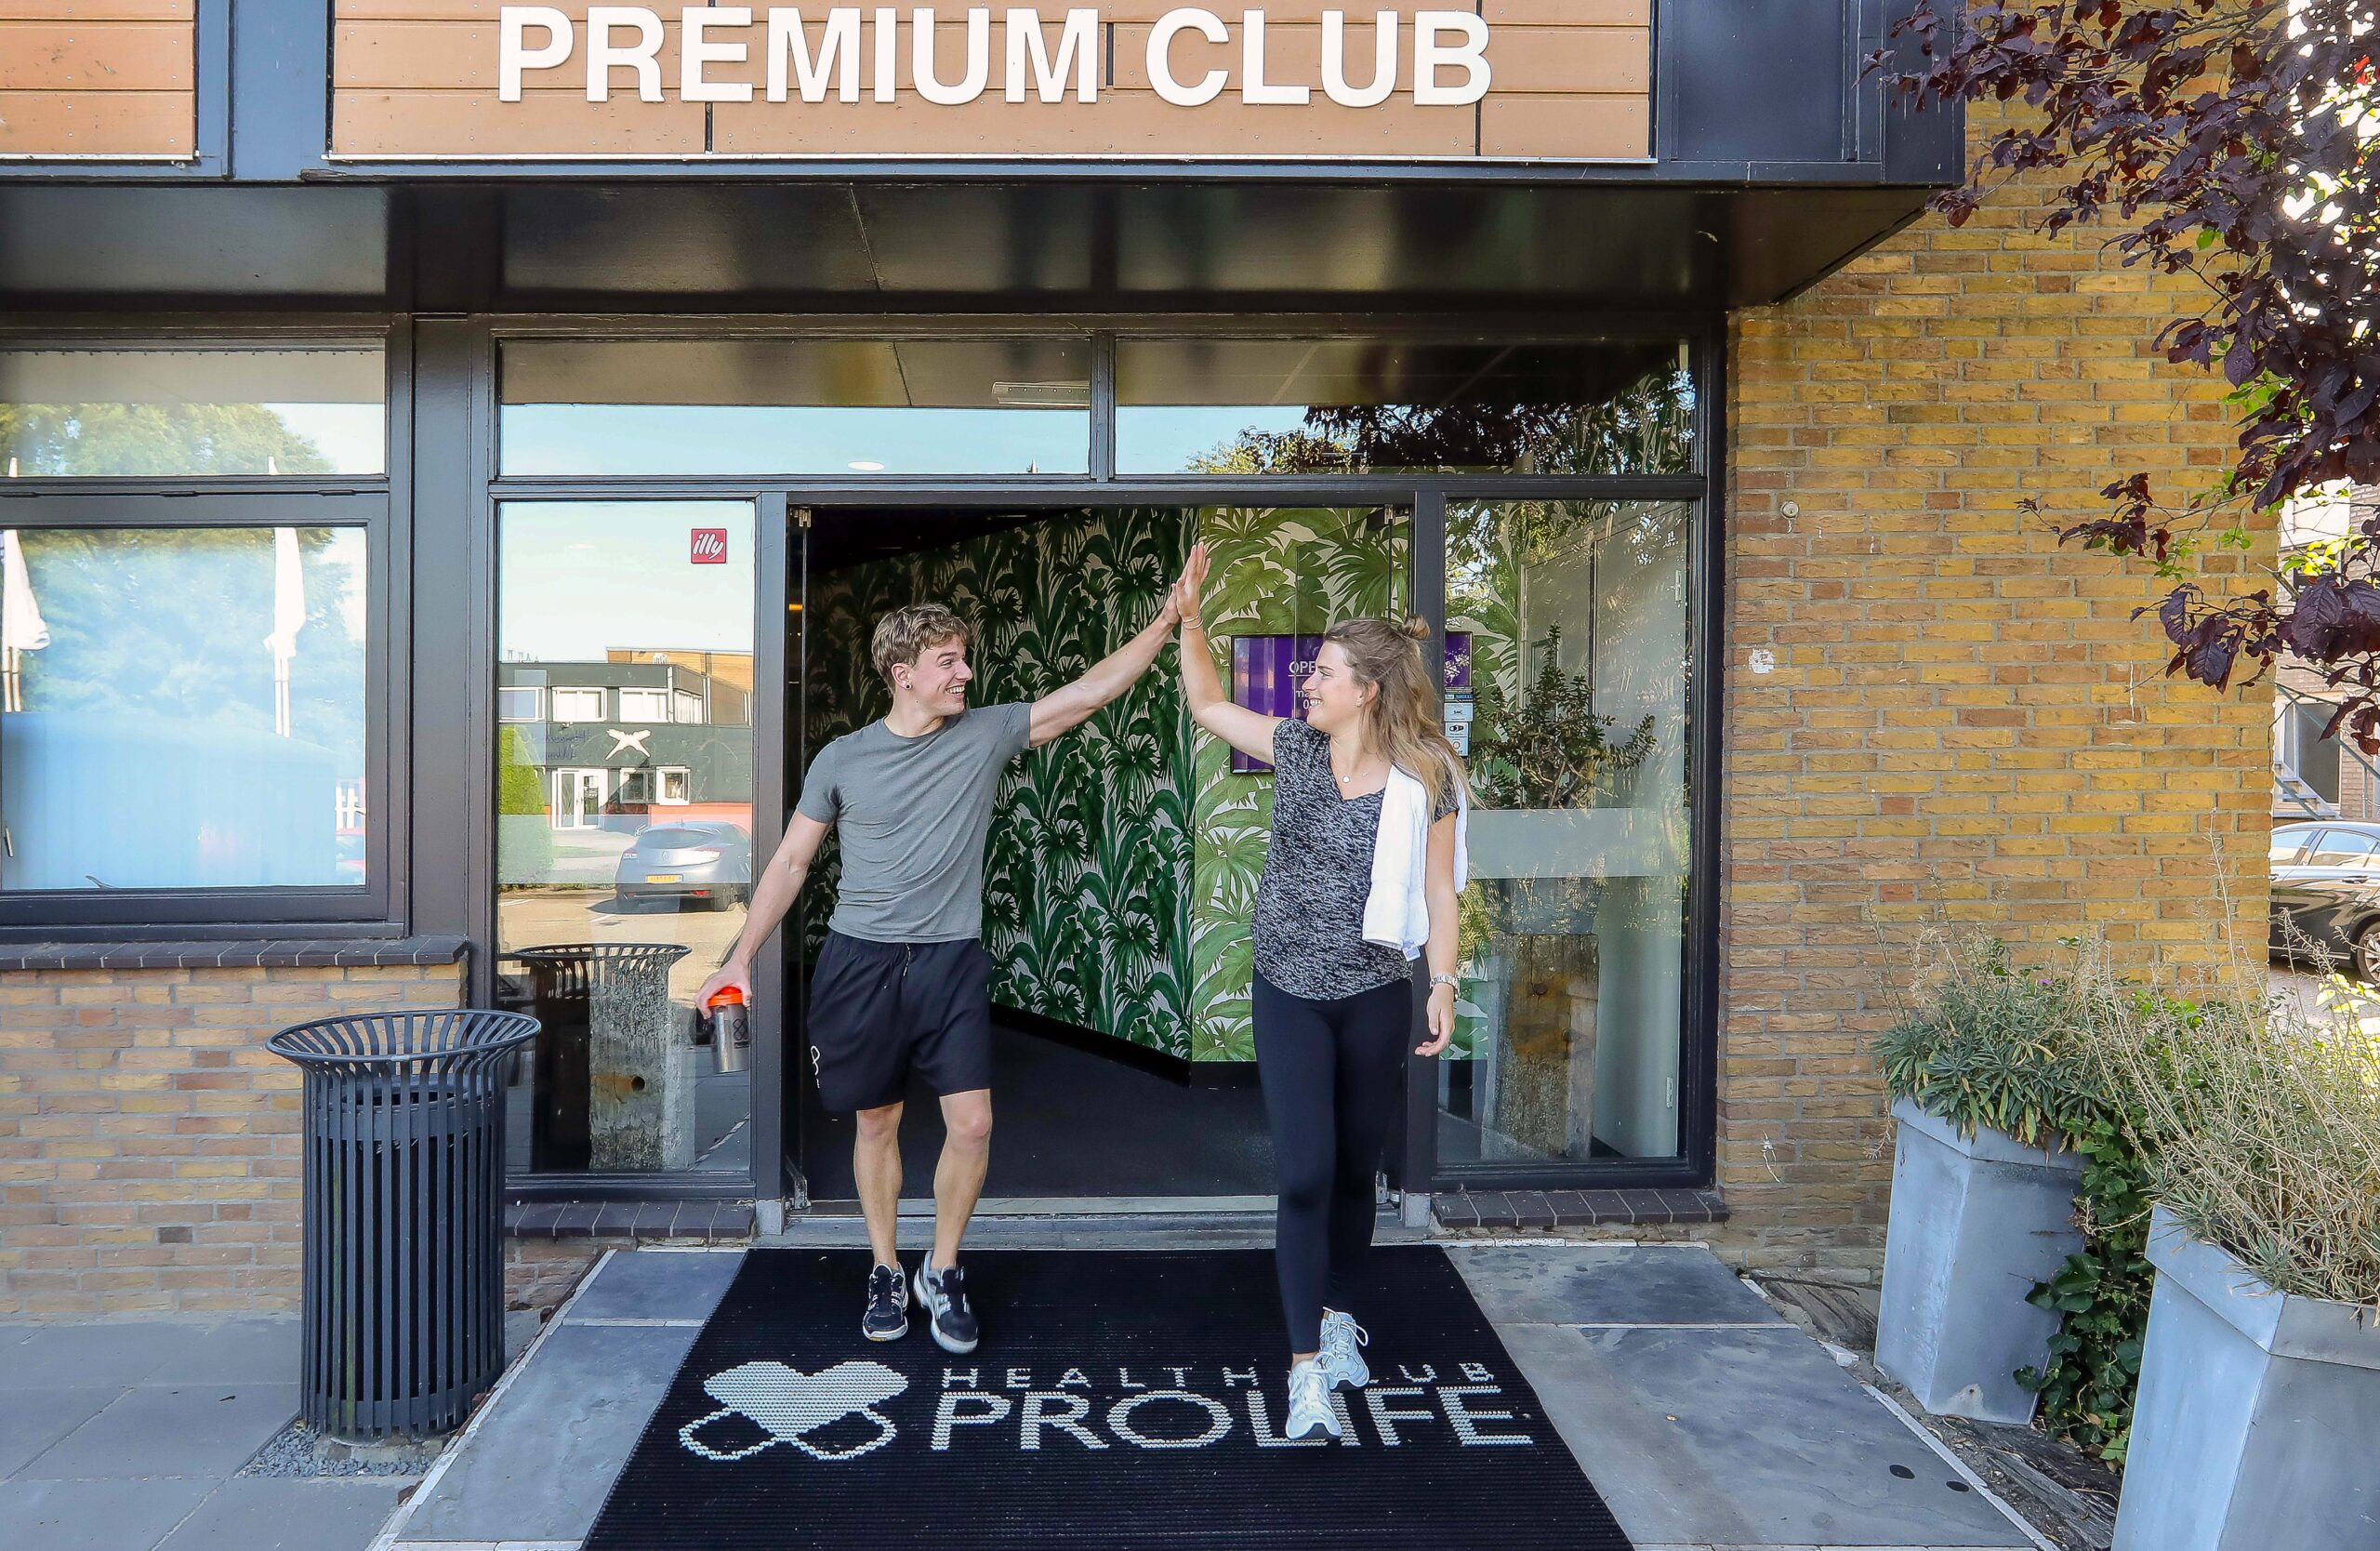 Over Healthclub ProLife in Warmond